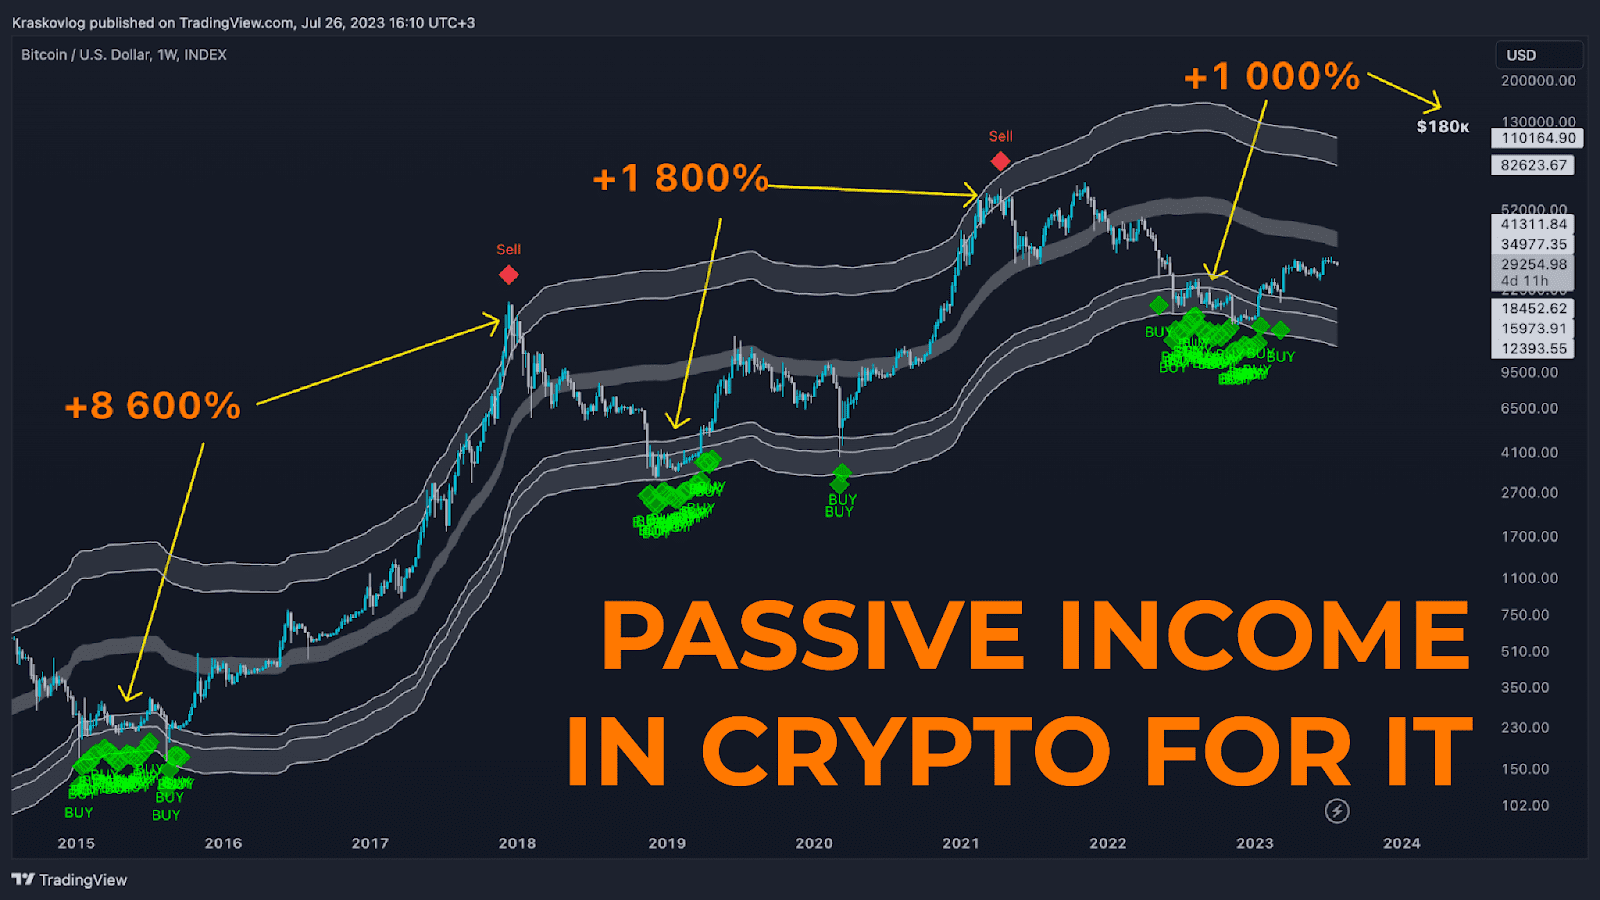 Passive Income in Crypto for IT